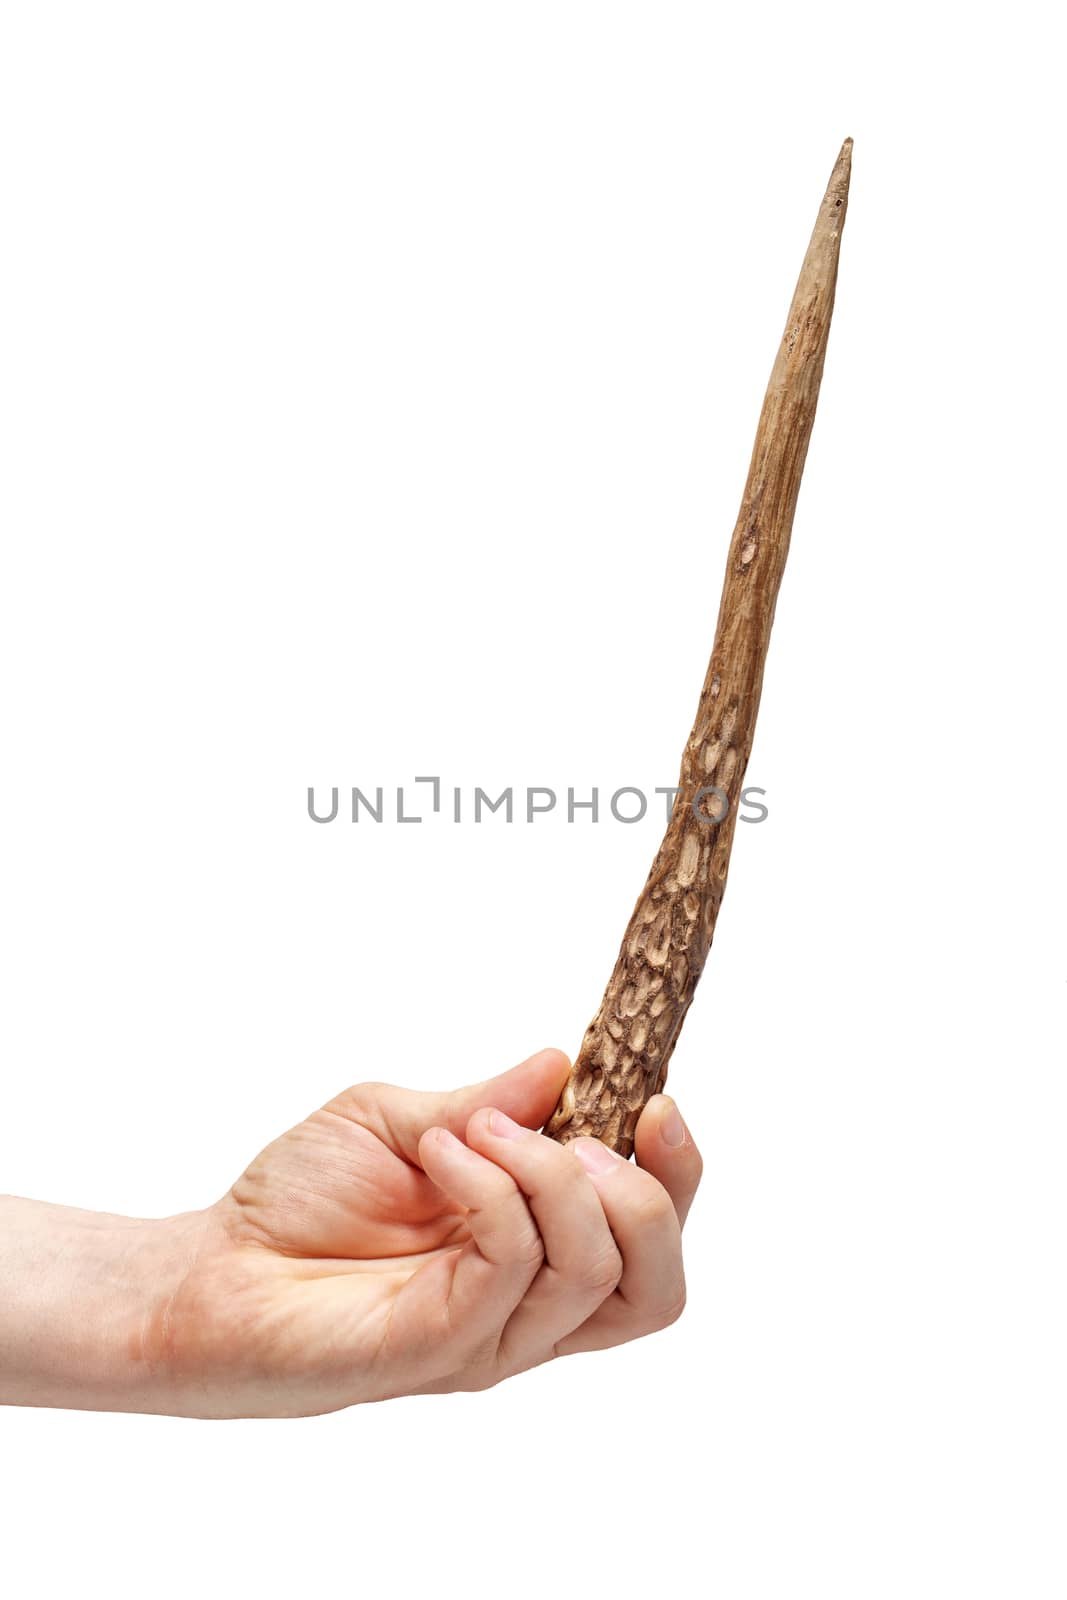 Hand and magic wand by Vagengeym